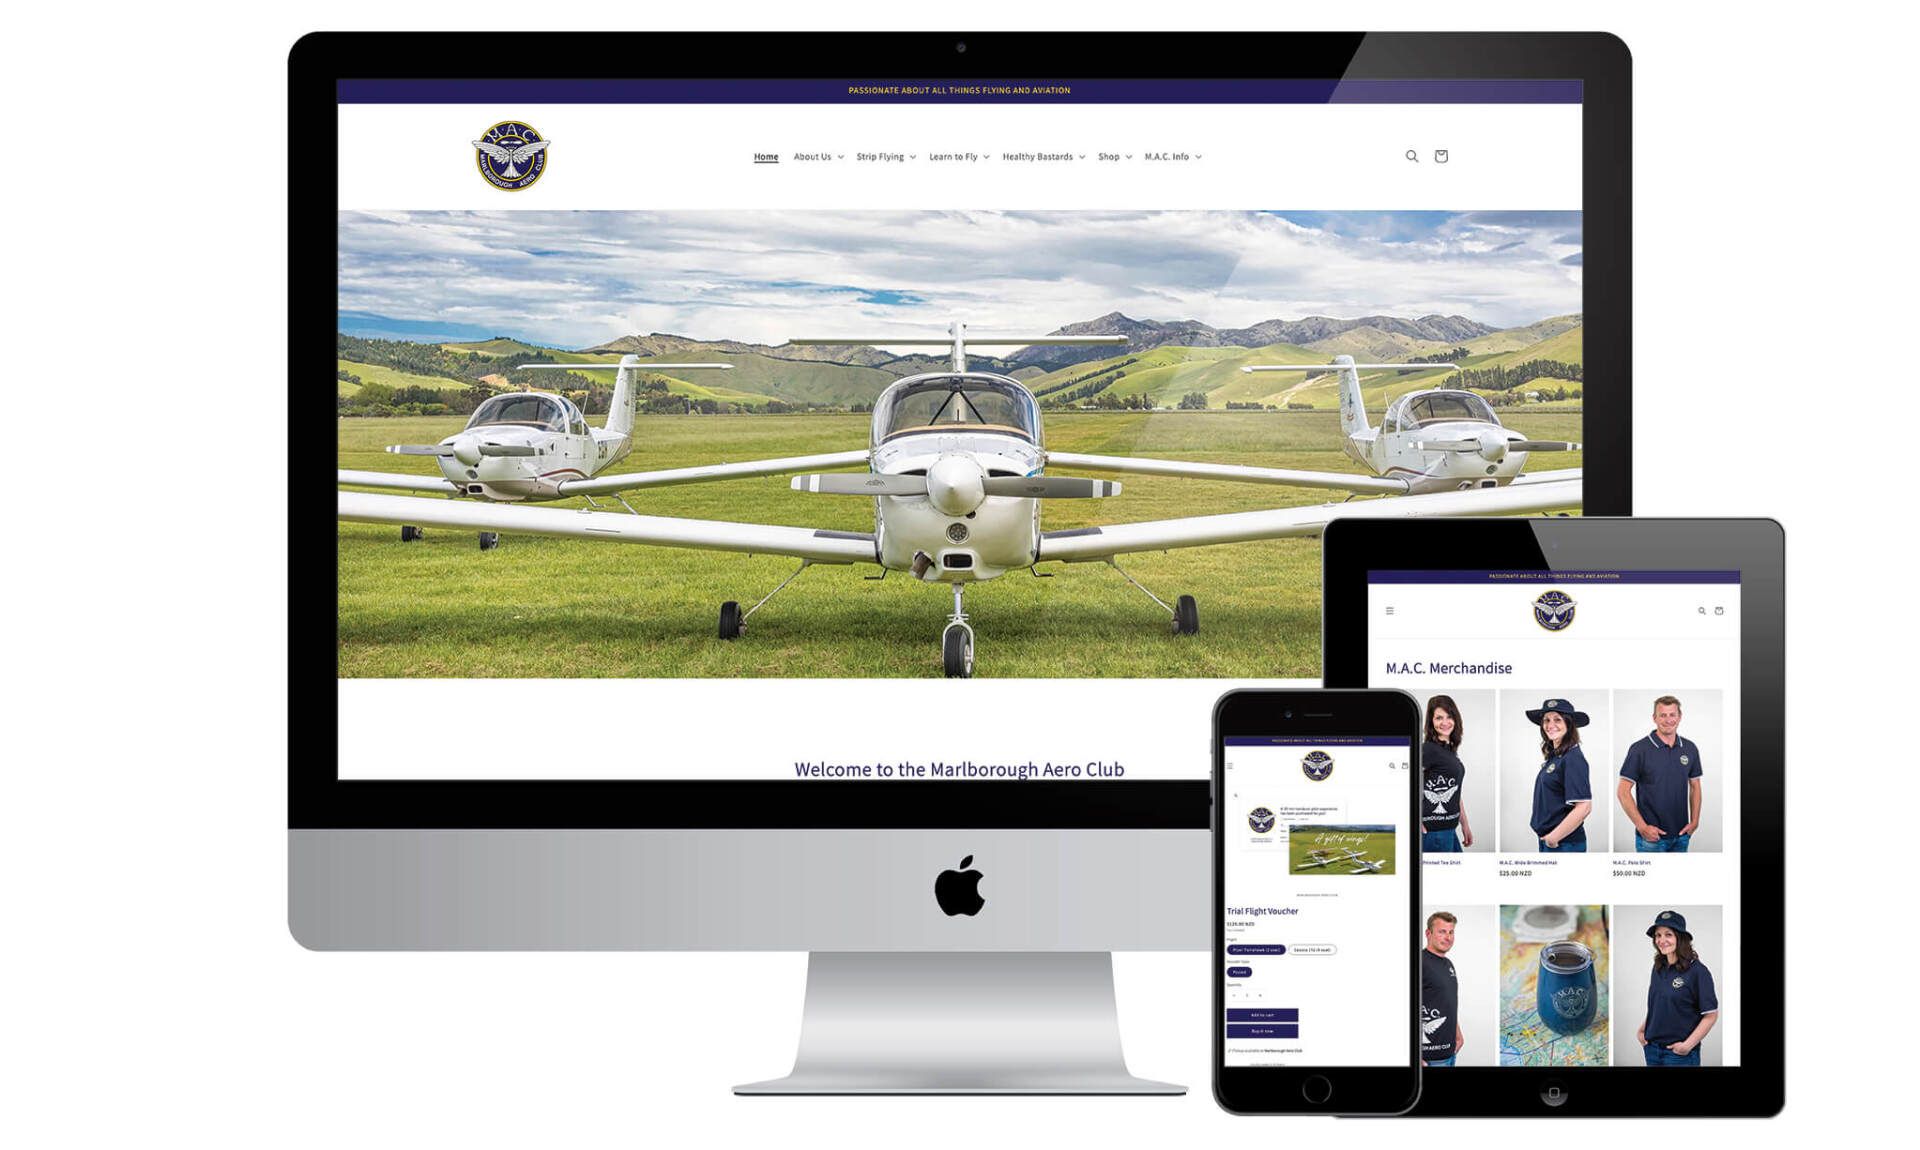 Marlborough Aero Club website designed by Vanilla Hayes creative graphic design  studio in Blenheim, Marlborough, New Zealand